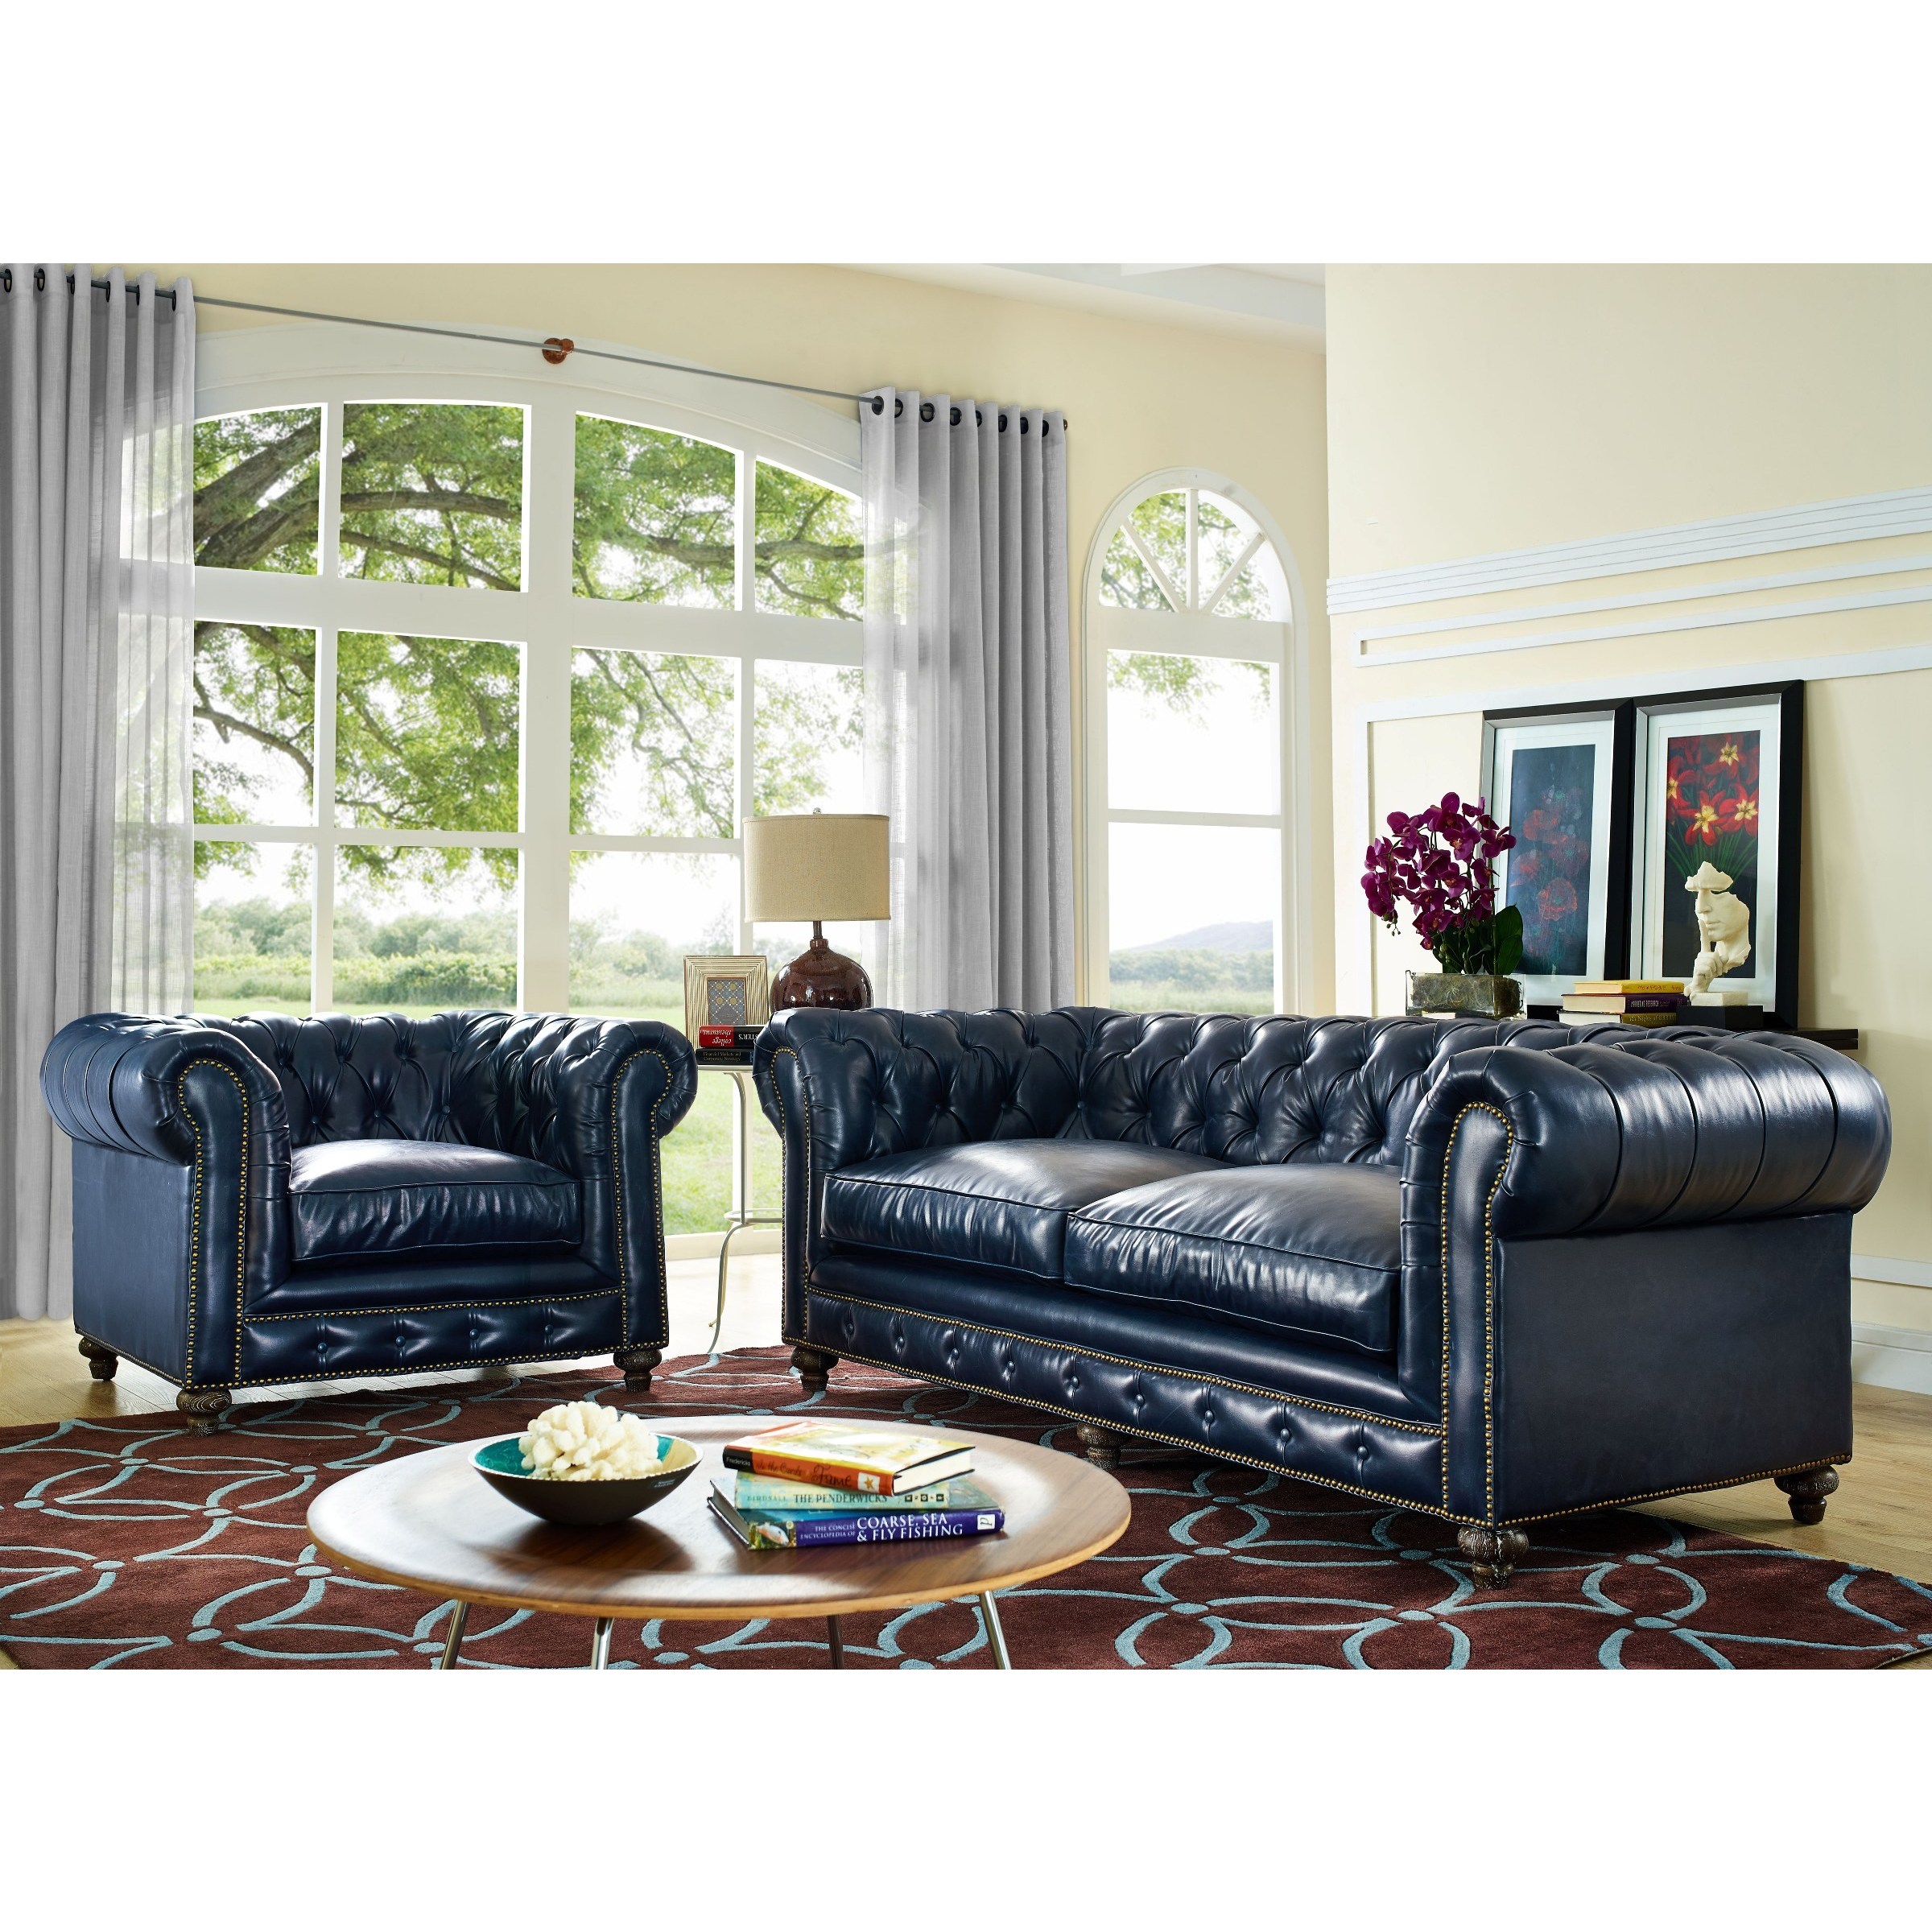 Durango Rustic Blue Leather Living Room Set Overstock 10156789